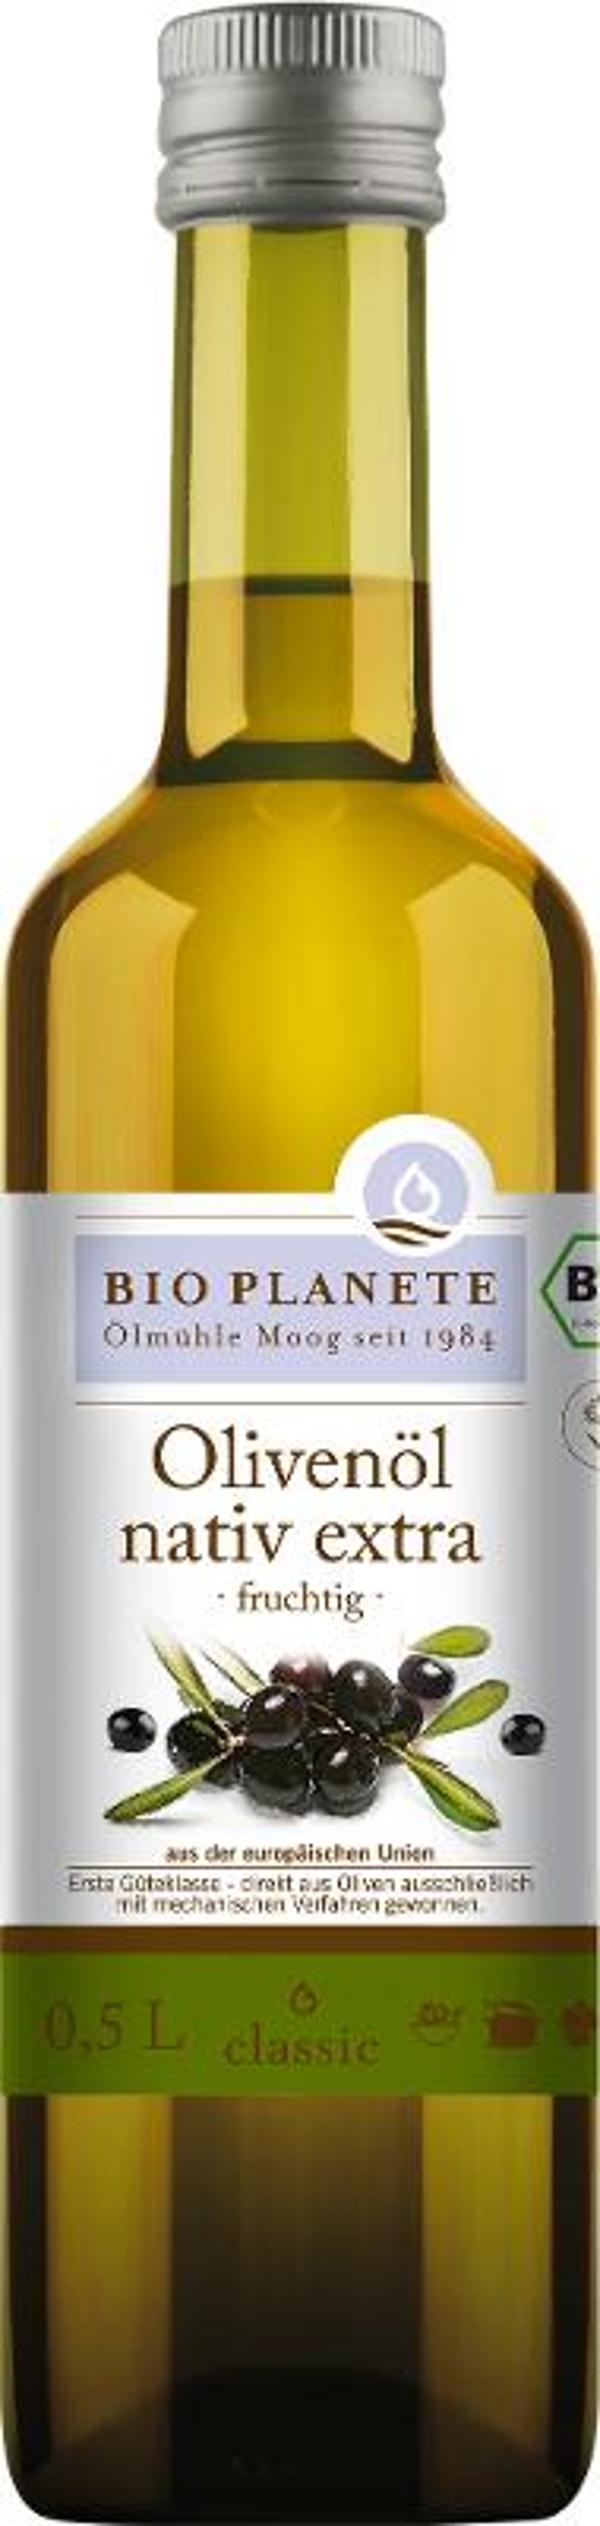 Produktfoto zu Olivenöl fruchtig 0,5 nativ extra Bio Planete